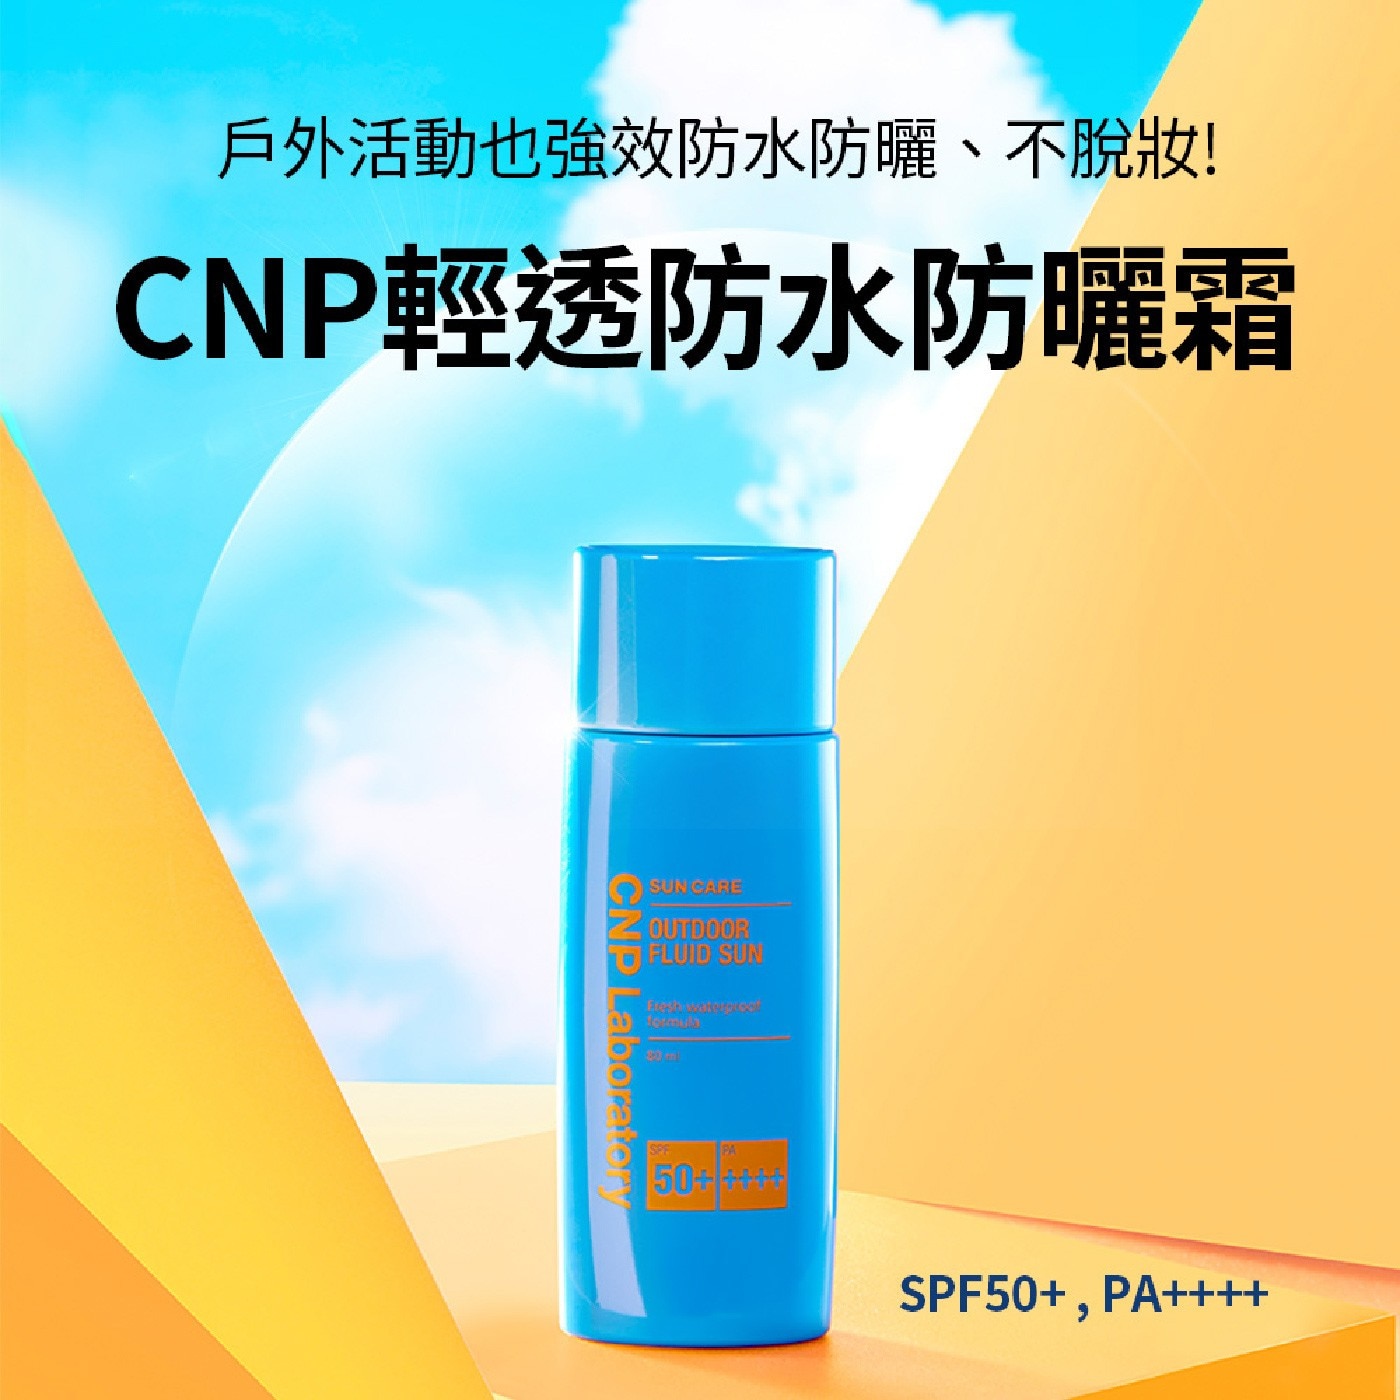 CNP Laboratory 輕透防水防曬霜組 SPF50+ PA++++ 80毫升 X 2入